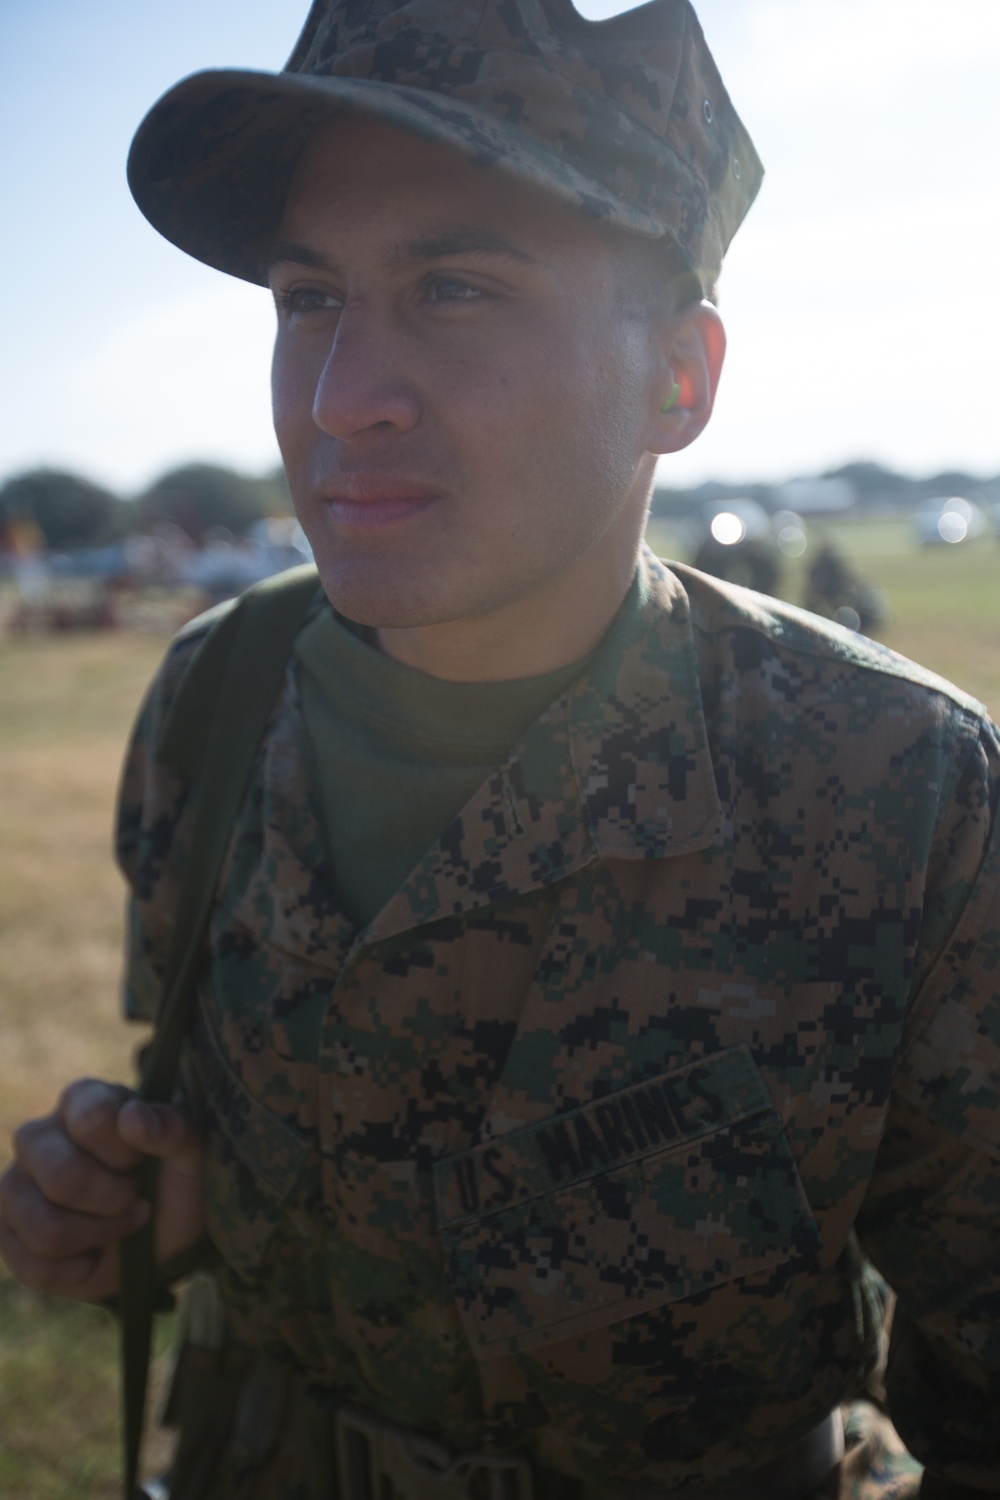 Alliance, Ohio, native training at Parris Island to become U.S. Marine